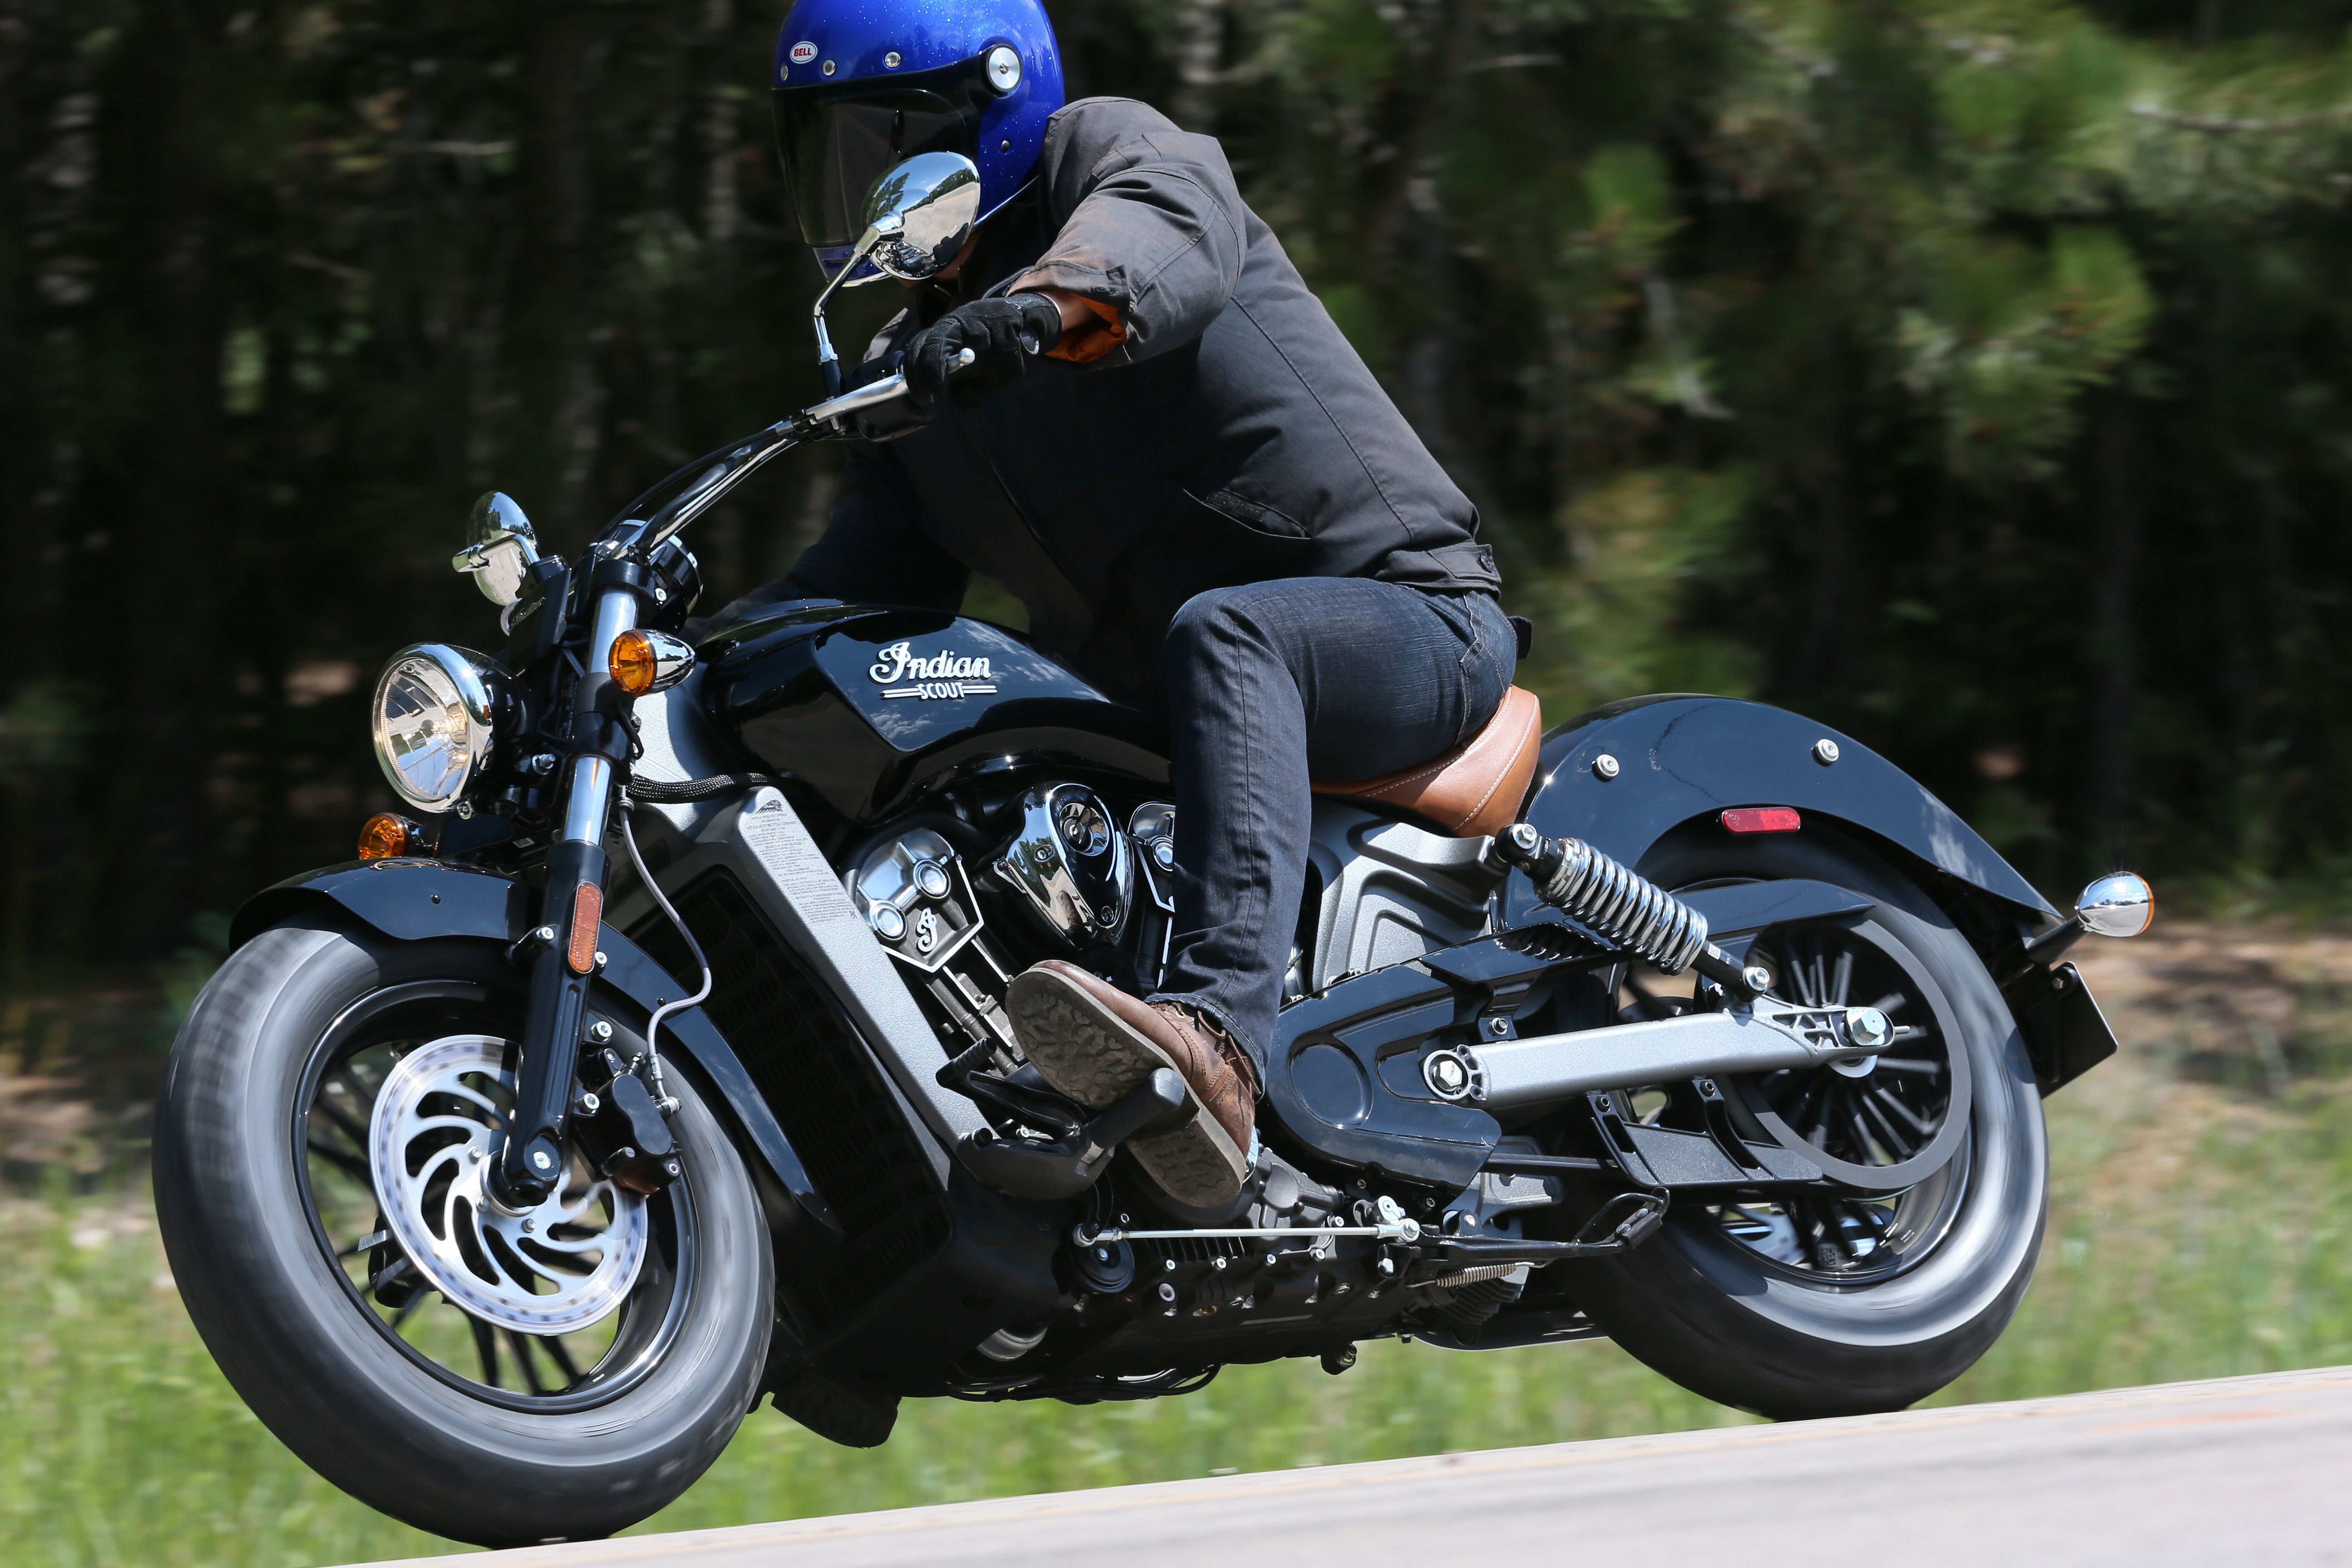 Find the Best Winter Motorcycle Jacket in Australia | Merla Moto